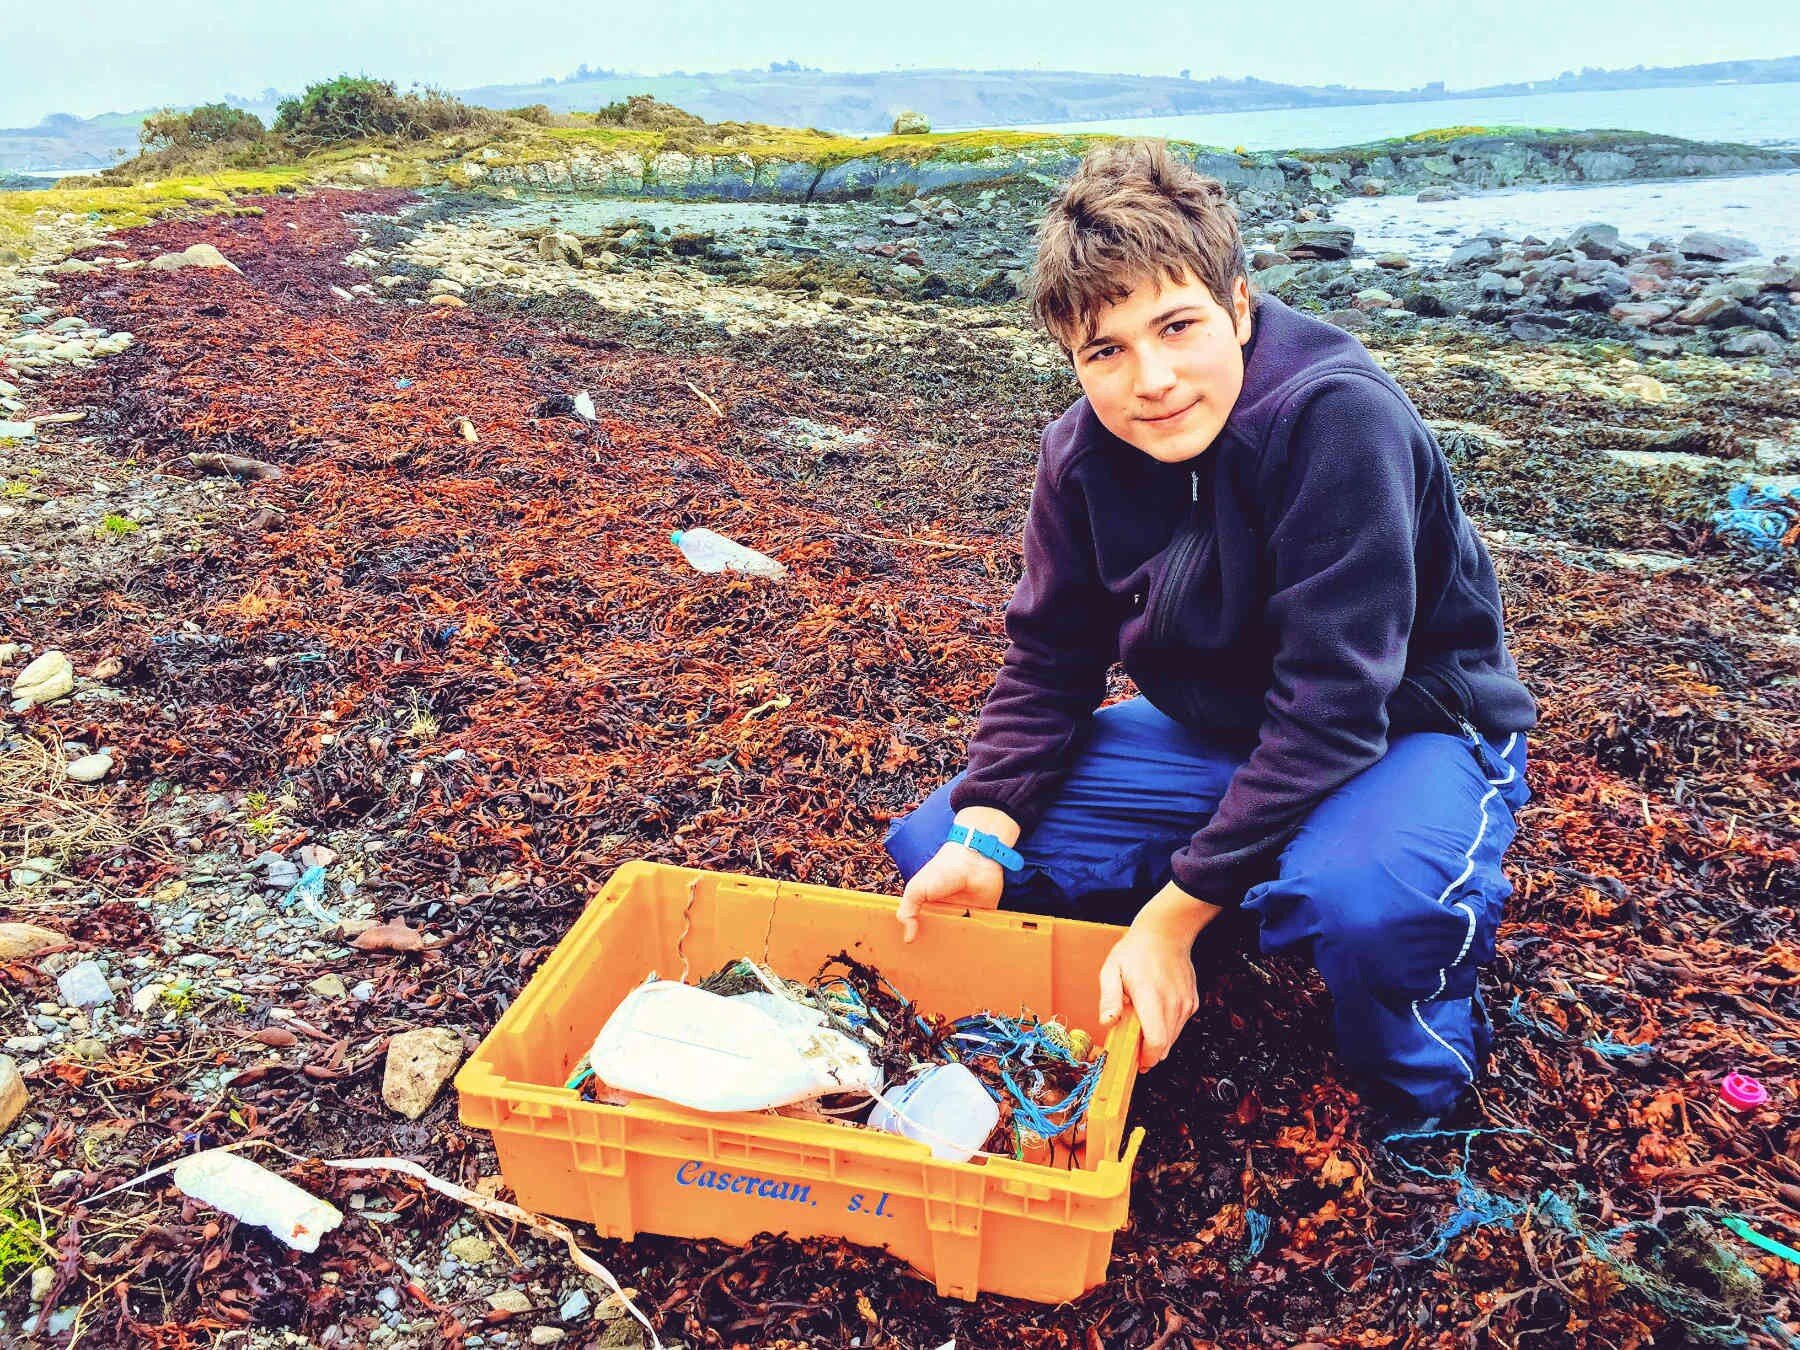 Fionn Ferreira collecting plastic waste